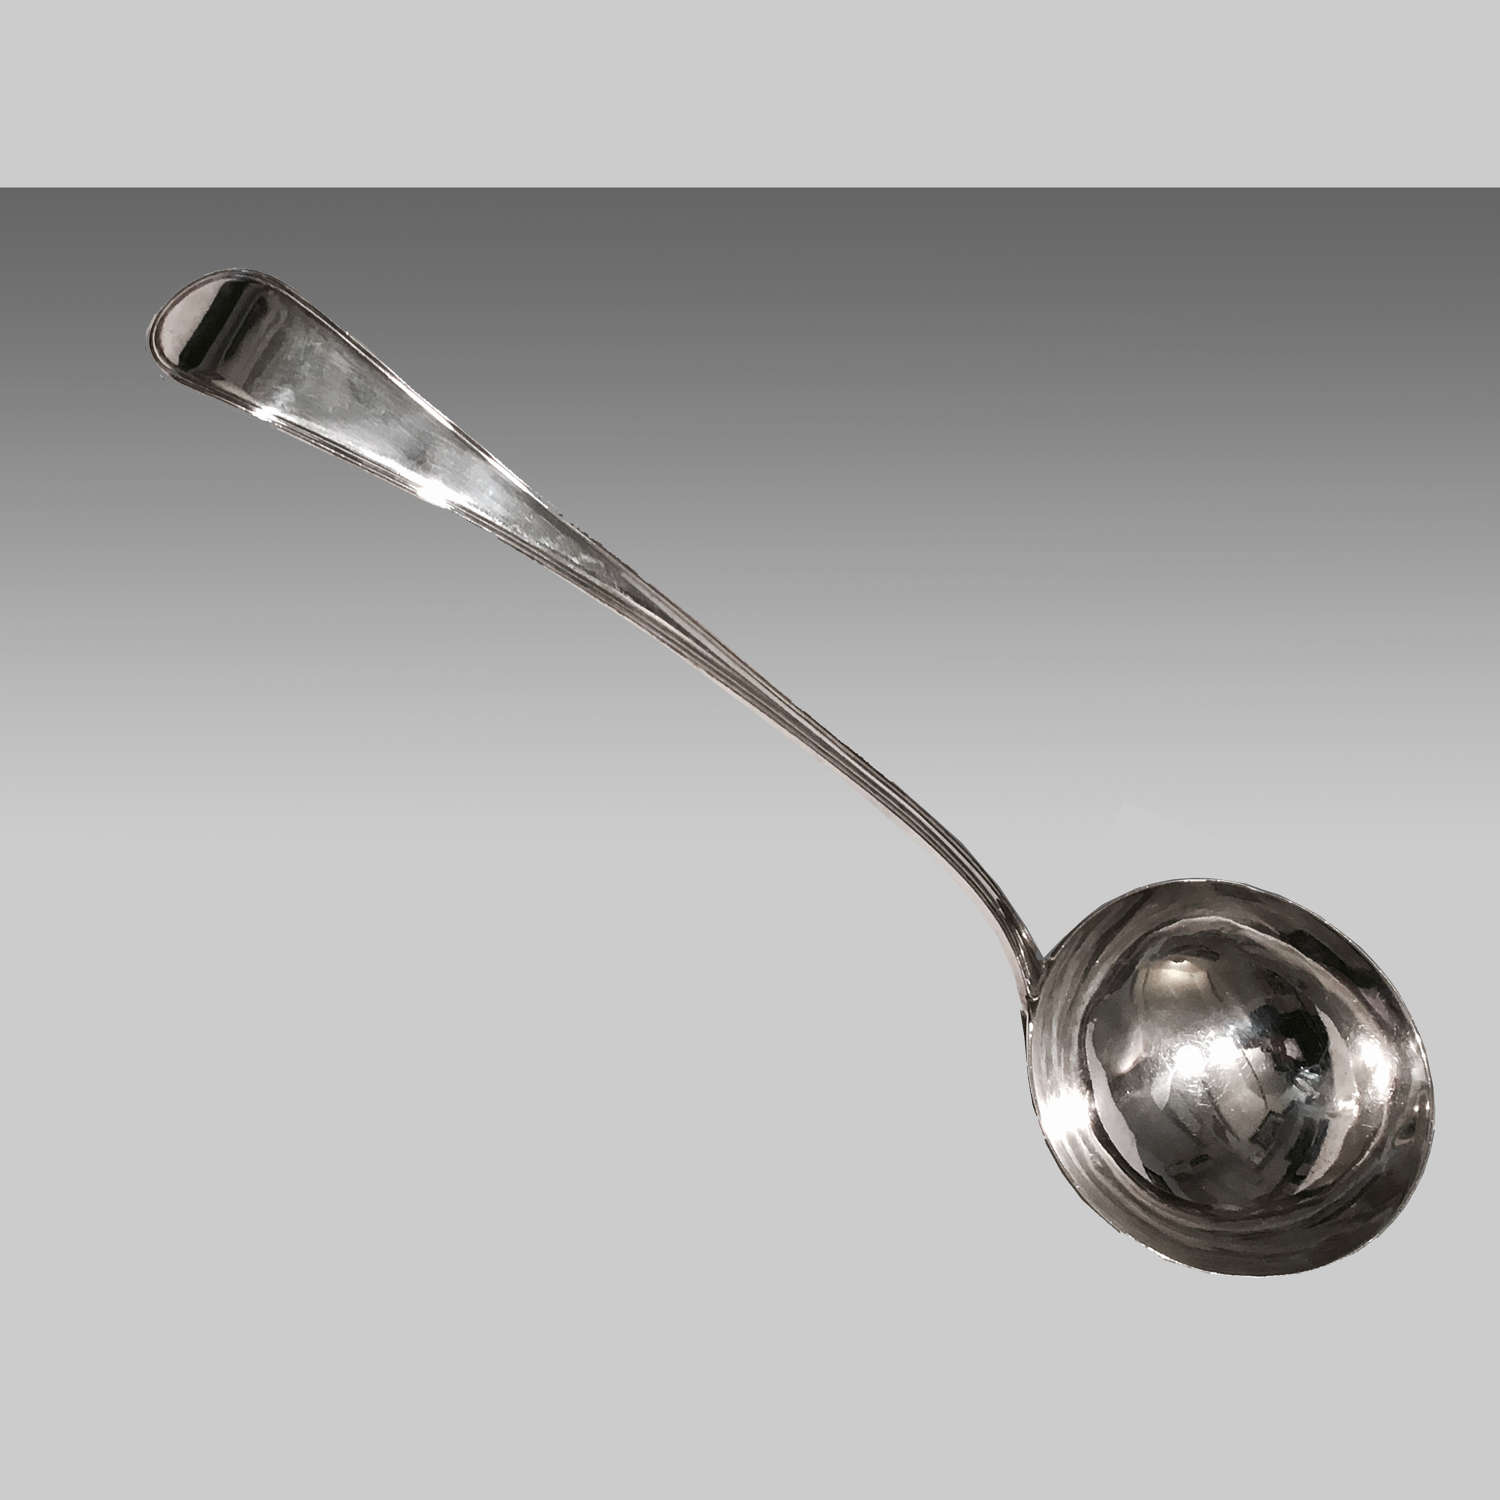 18th century silver serving ladle